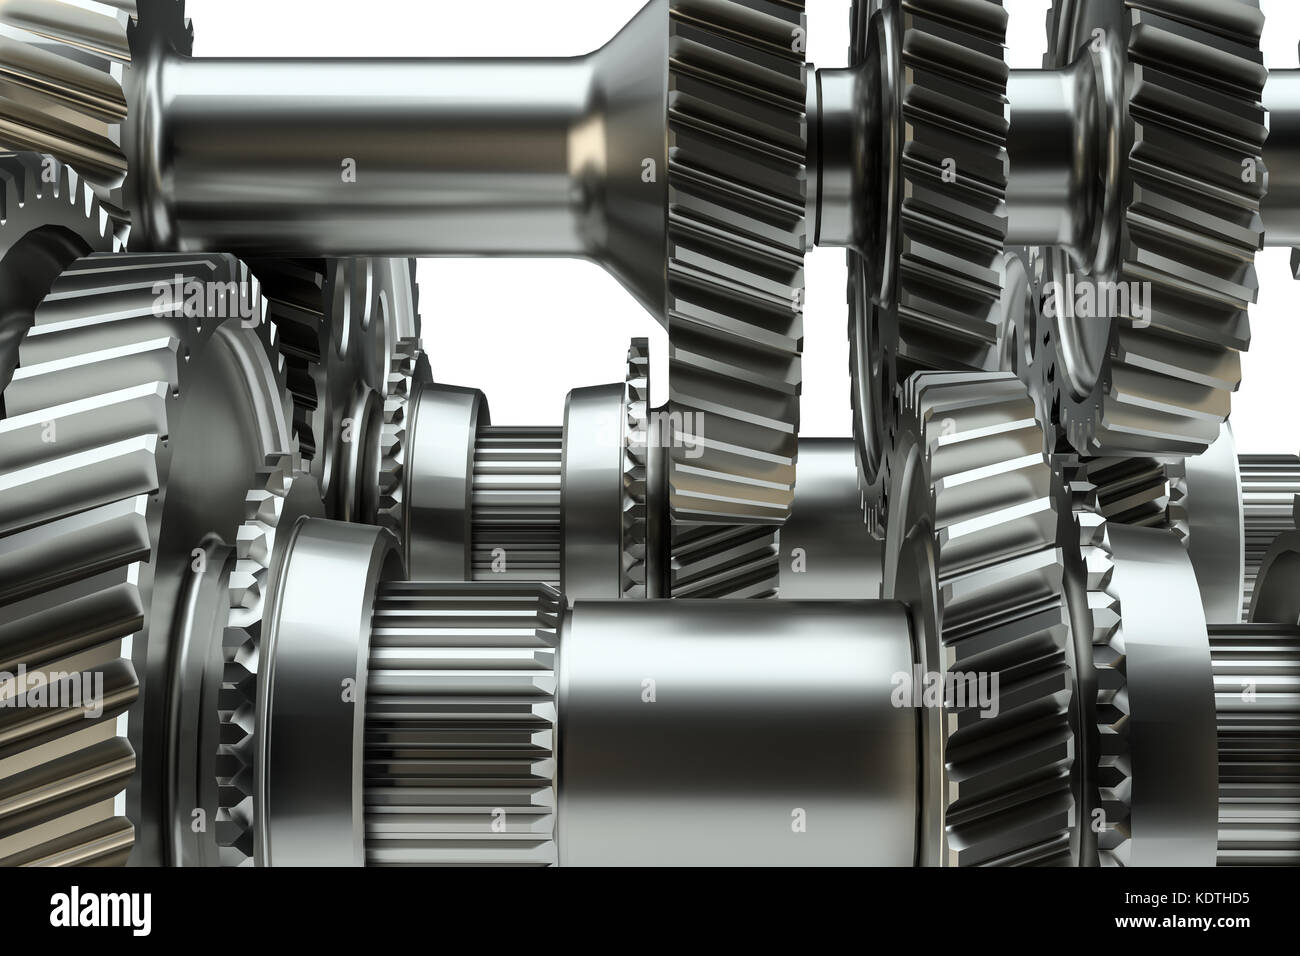 Cog gears mechanism concept. 3d illustration Stock Photo